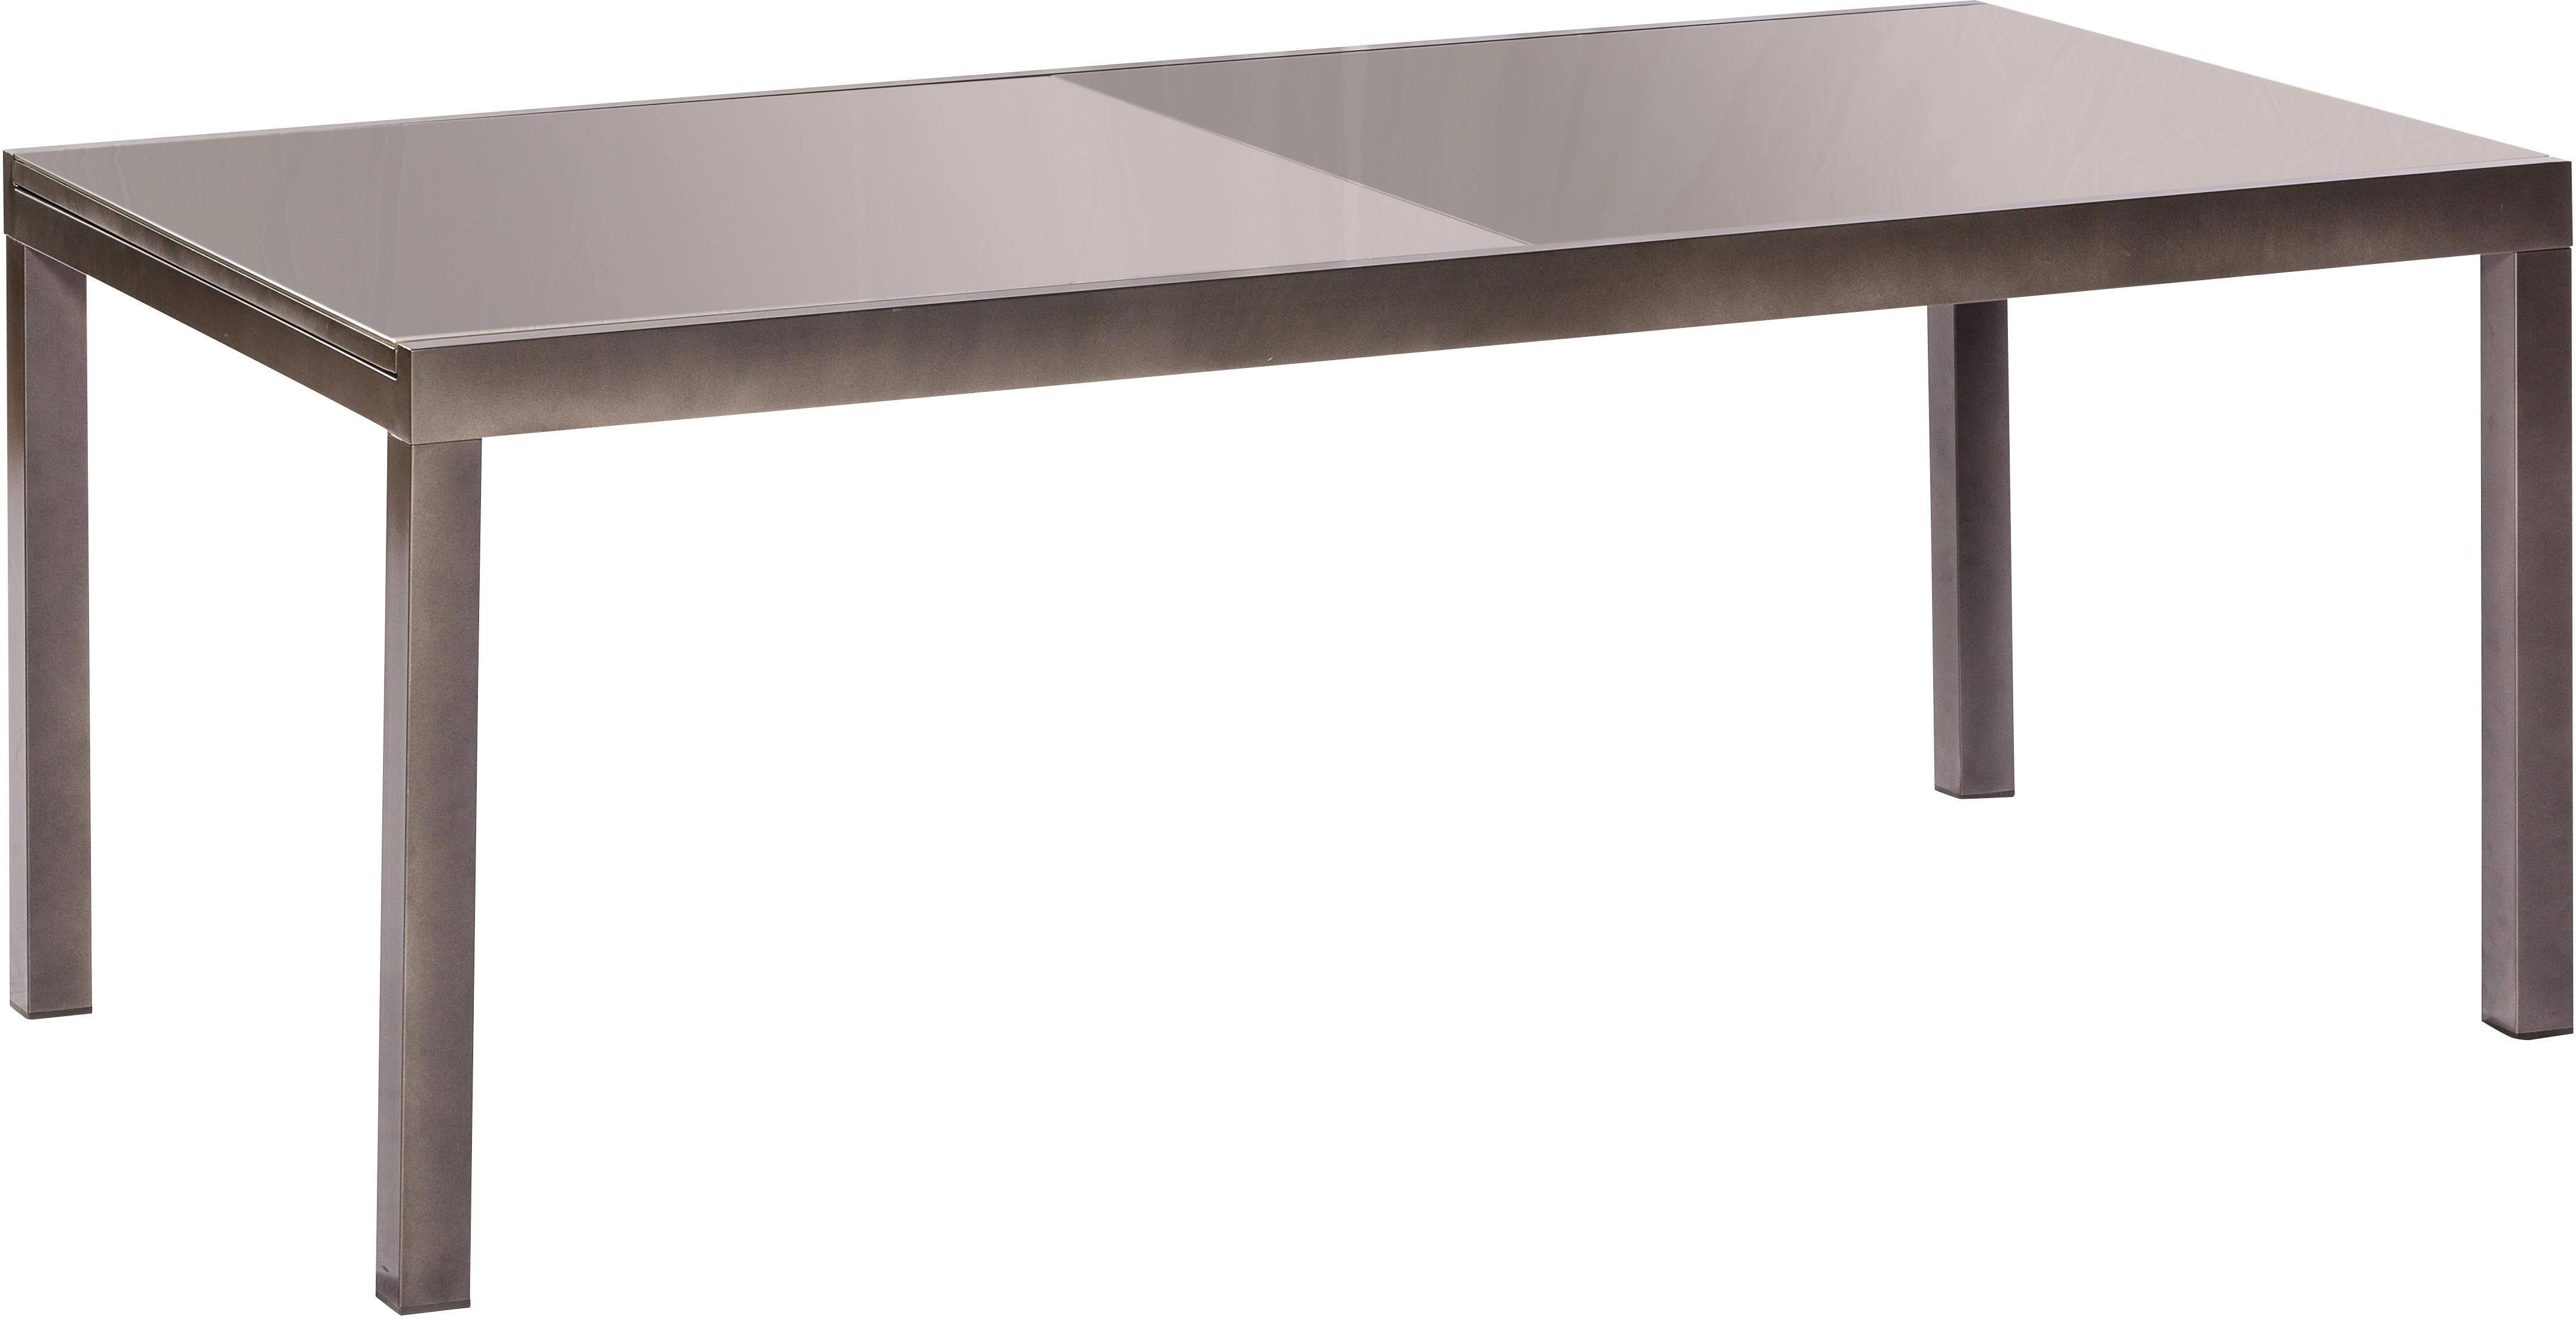 Merxx Gartentisch Semi Rechteckig Aluminium kaufen Ausziehbar cm cm 200/300 110 x OBI bei Grau